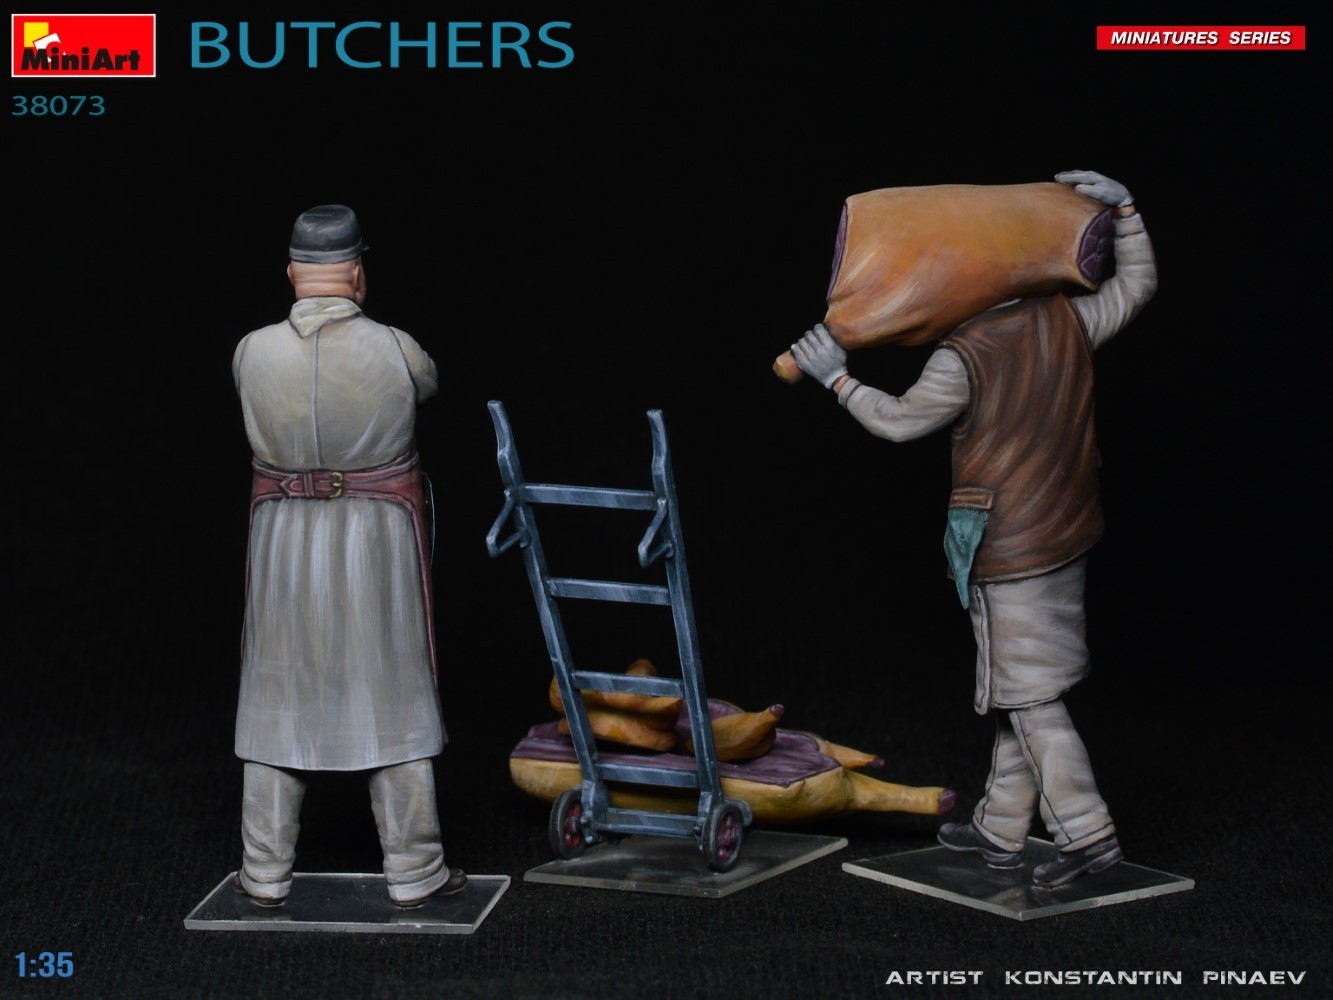 MiniArt Announces New 1/35 Scale Butchers Kit Artist: Konstantin Pinaev-3